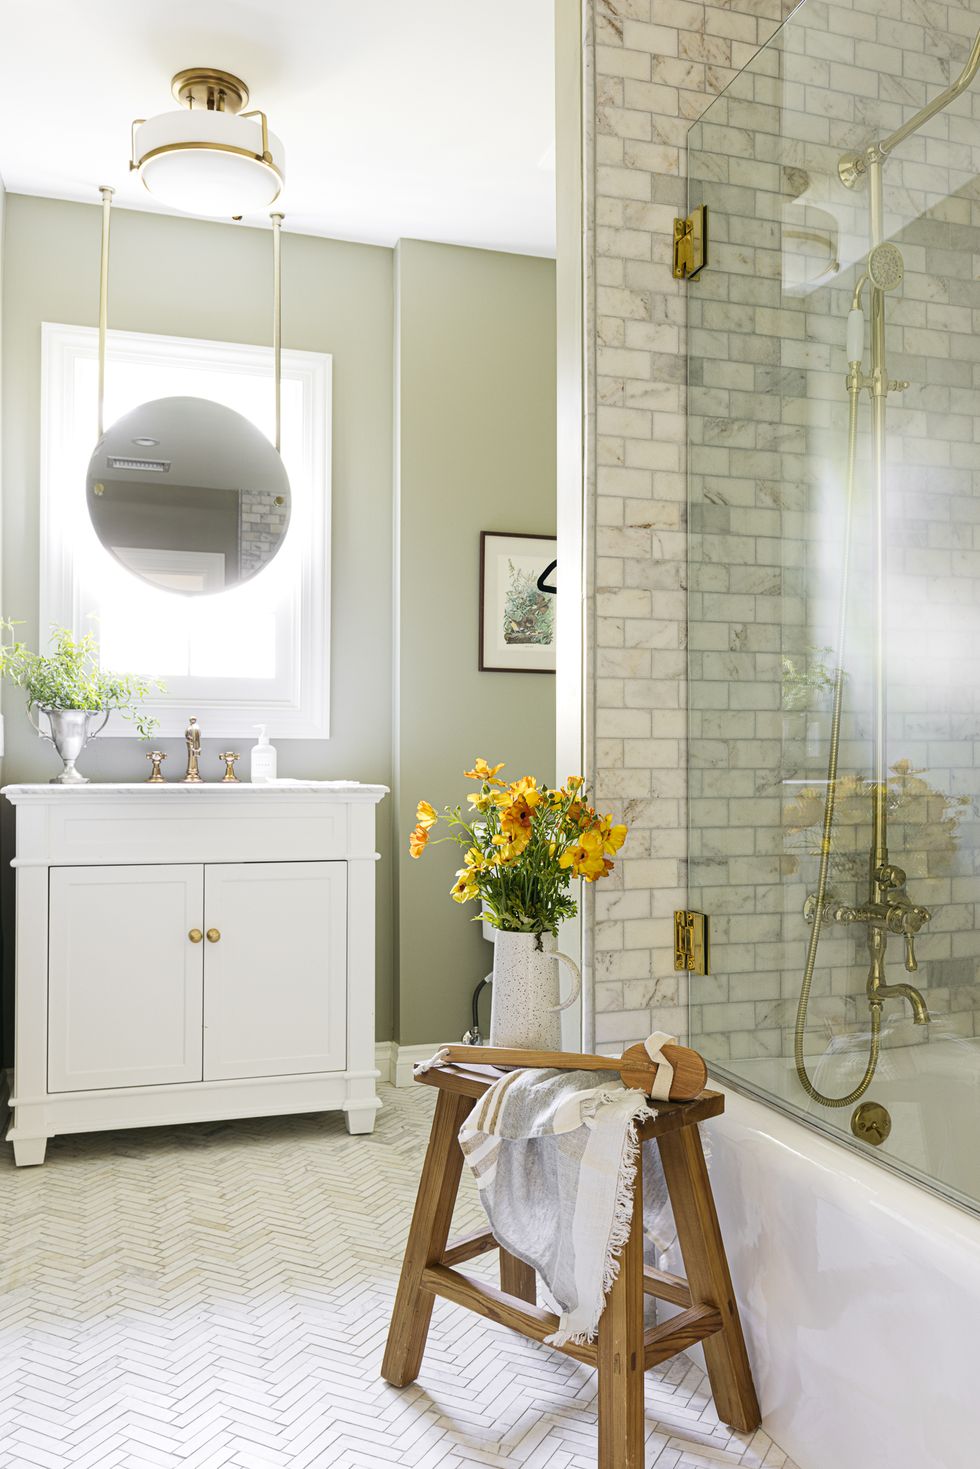 shower, vanity, and round mirror in bathroom